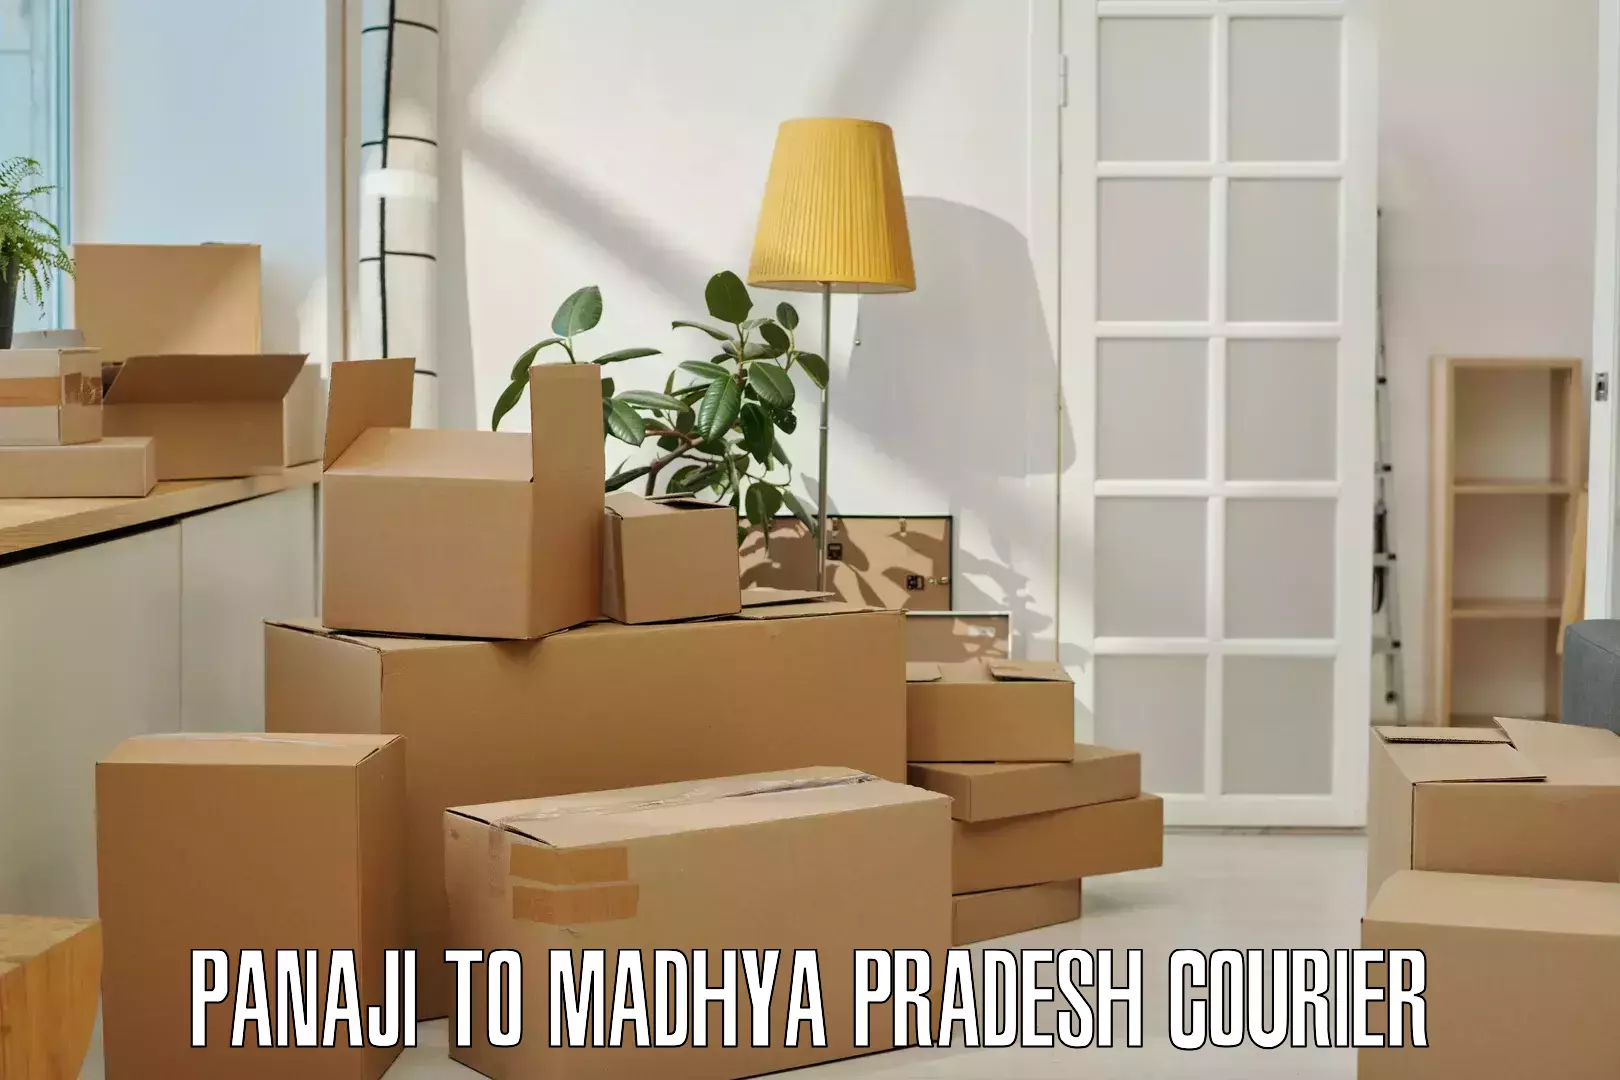 User-friendly courier app Panaji to Maheshwar